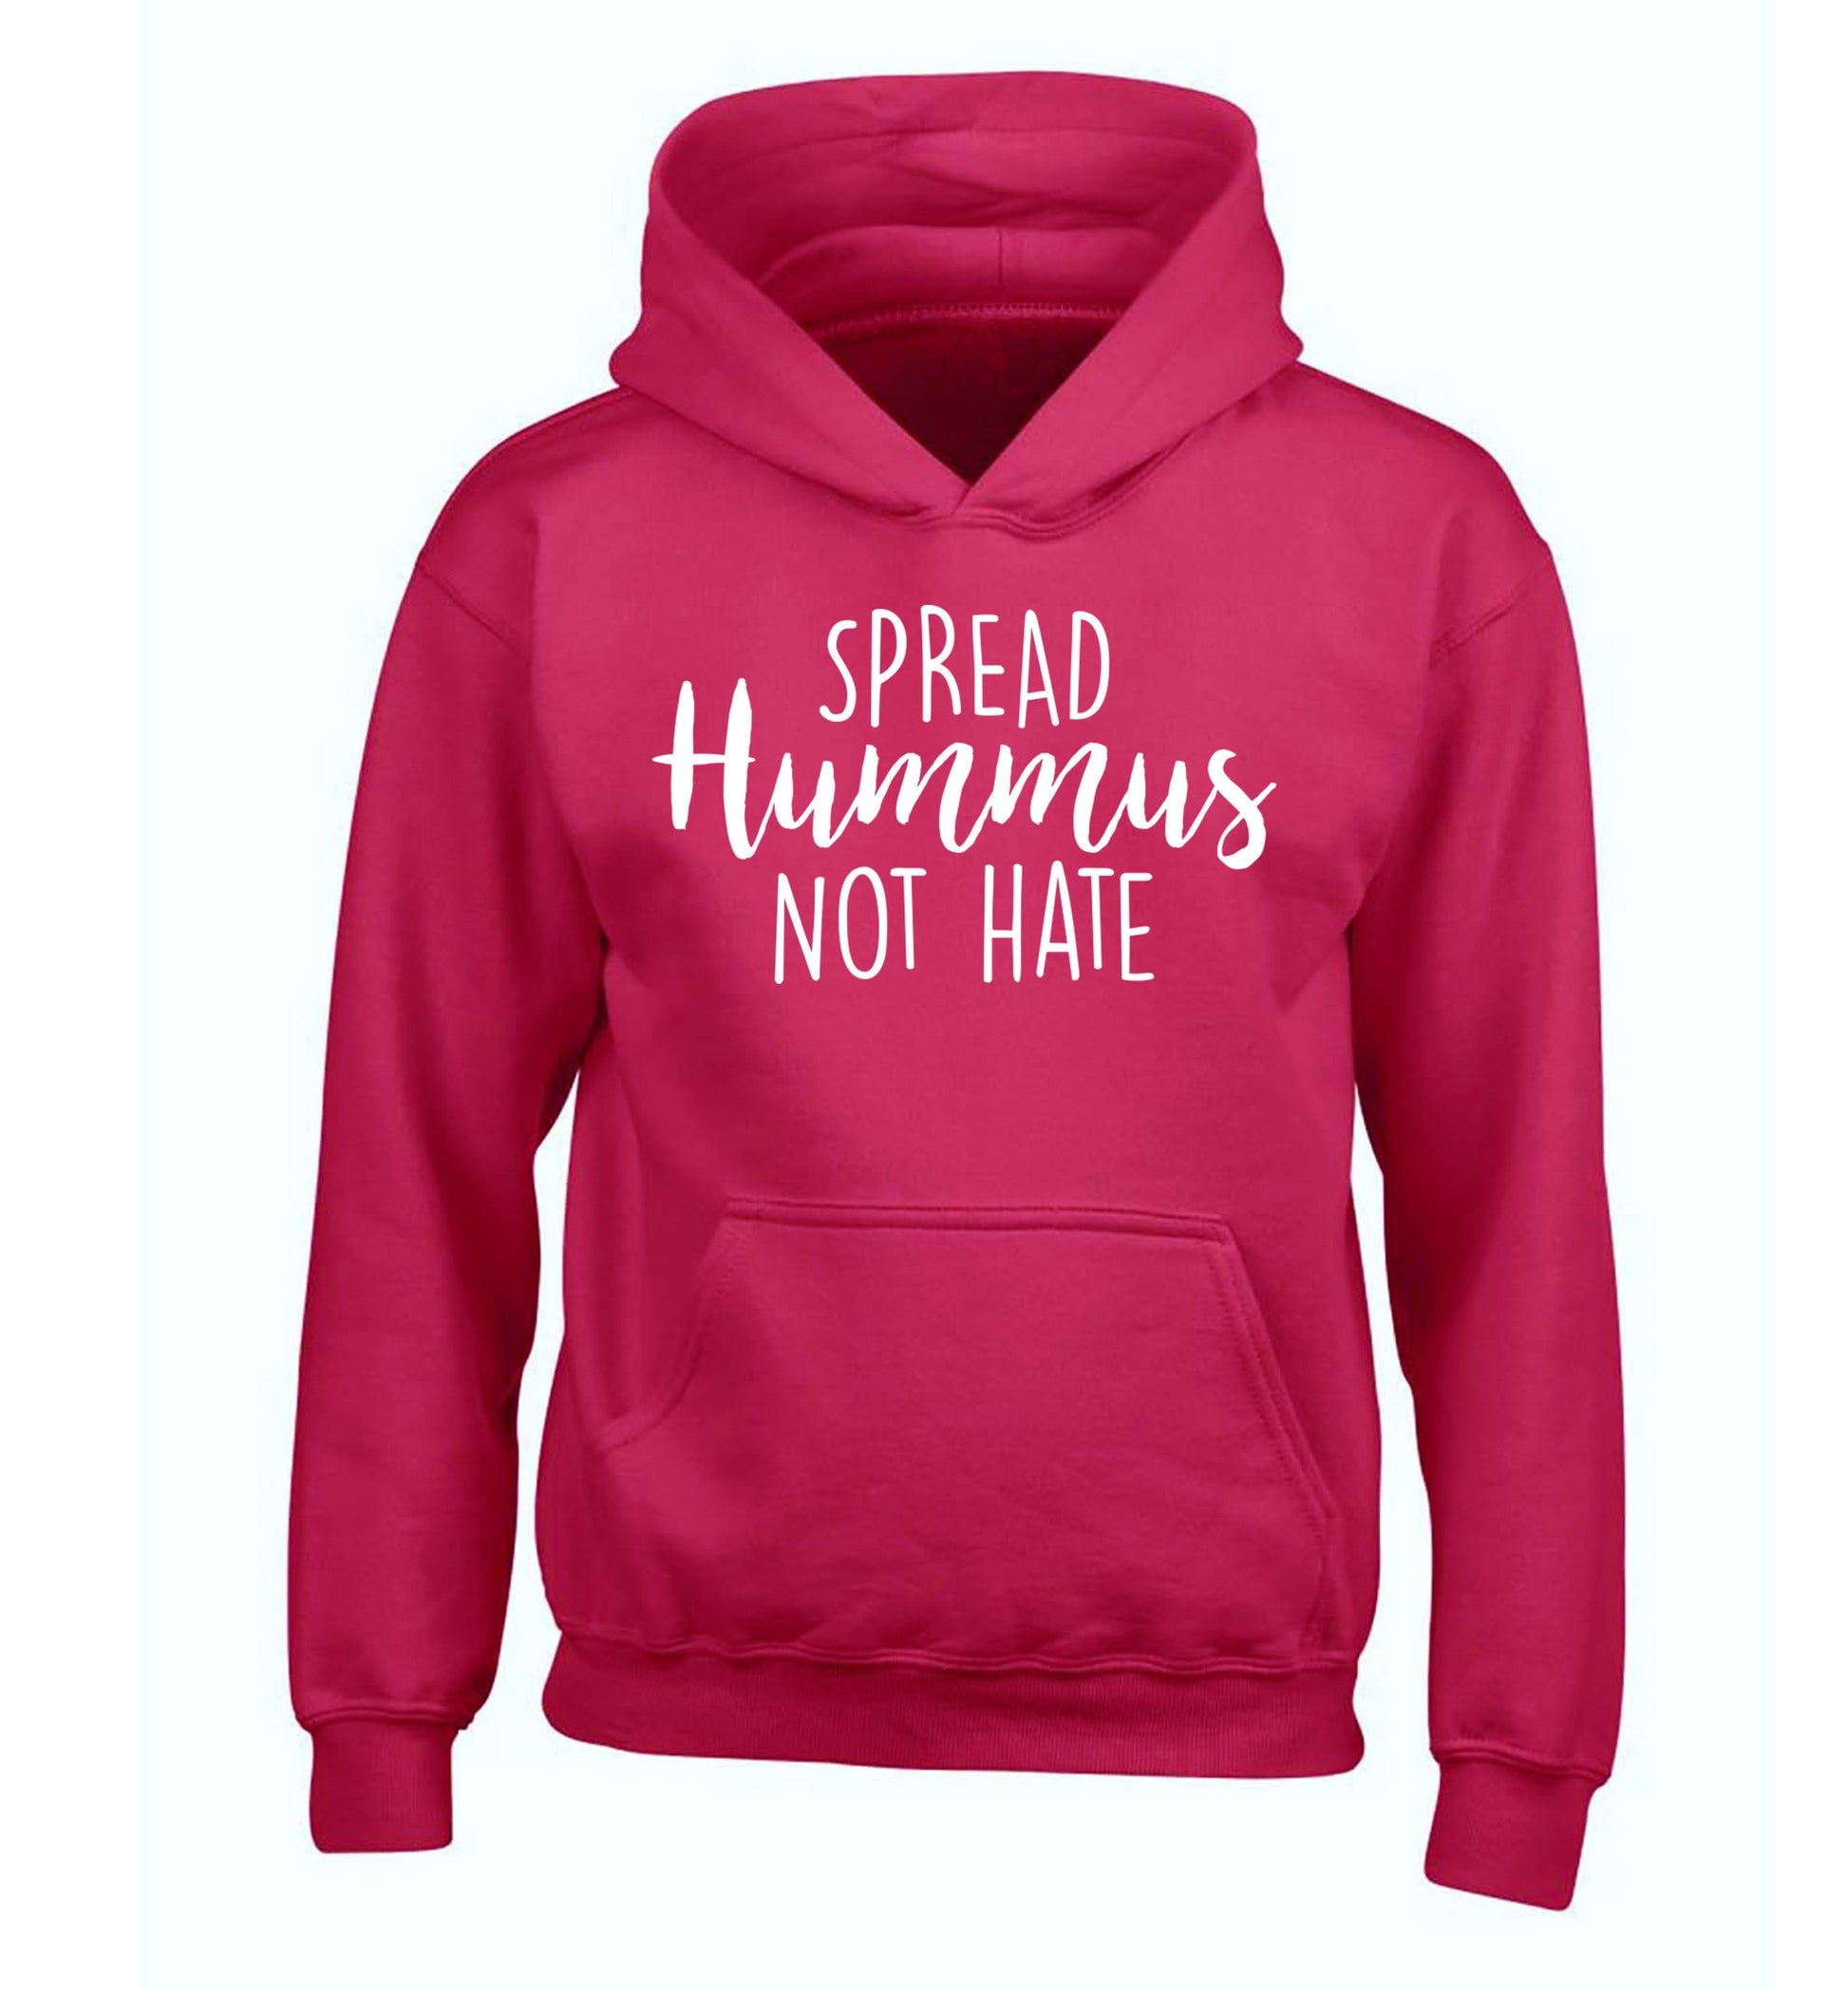 Spread hummus not hate script text children's pink hoodie 12-14 Years